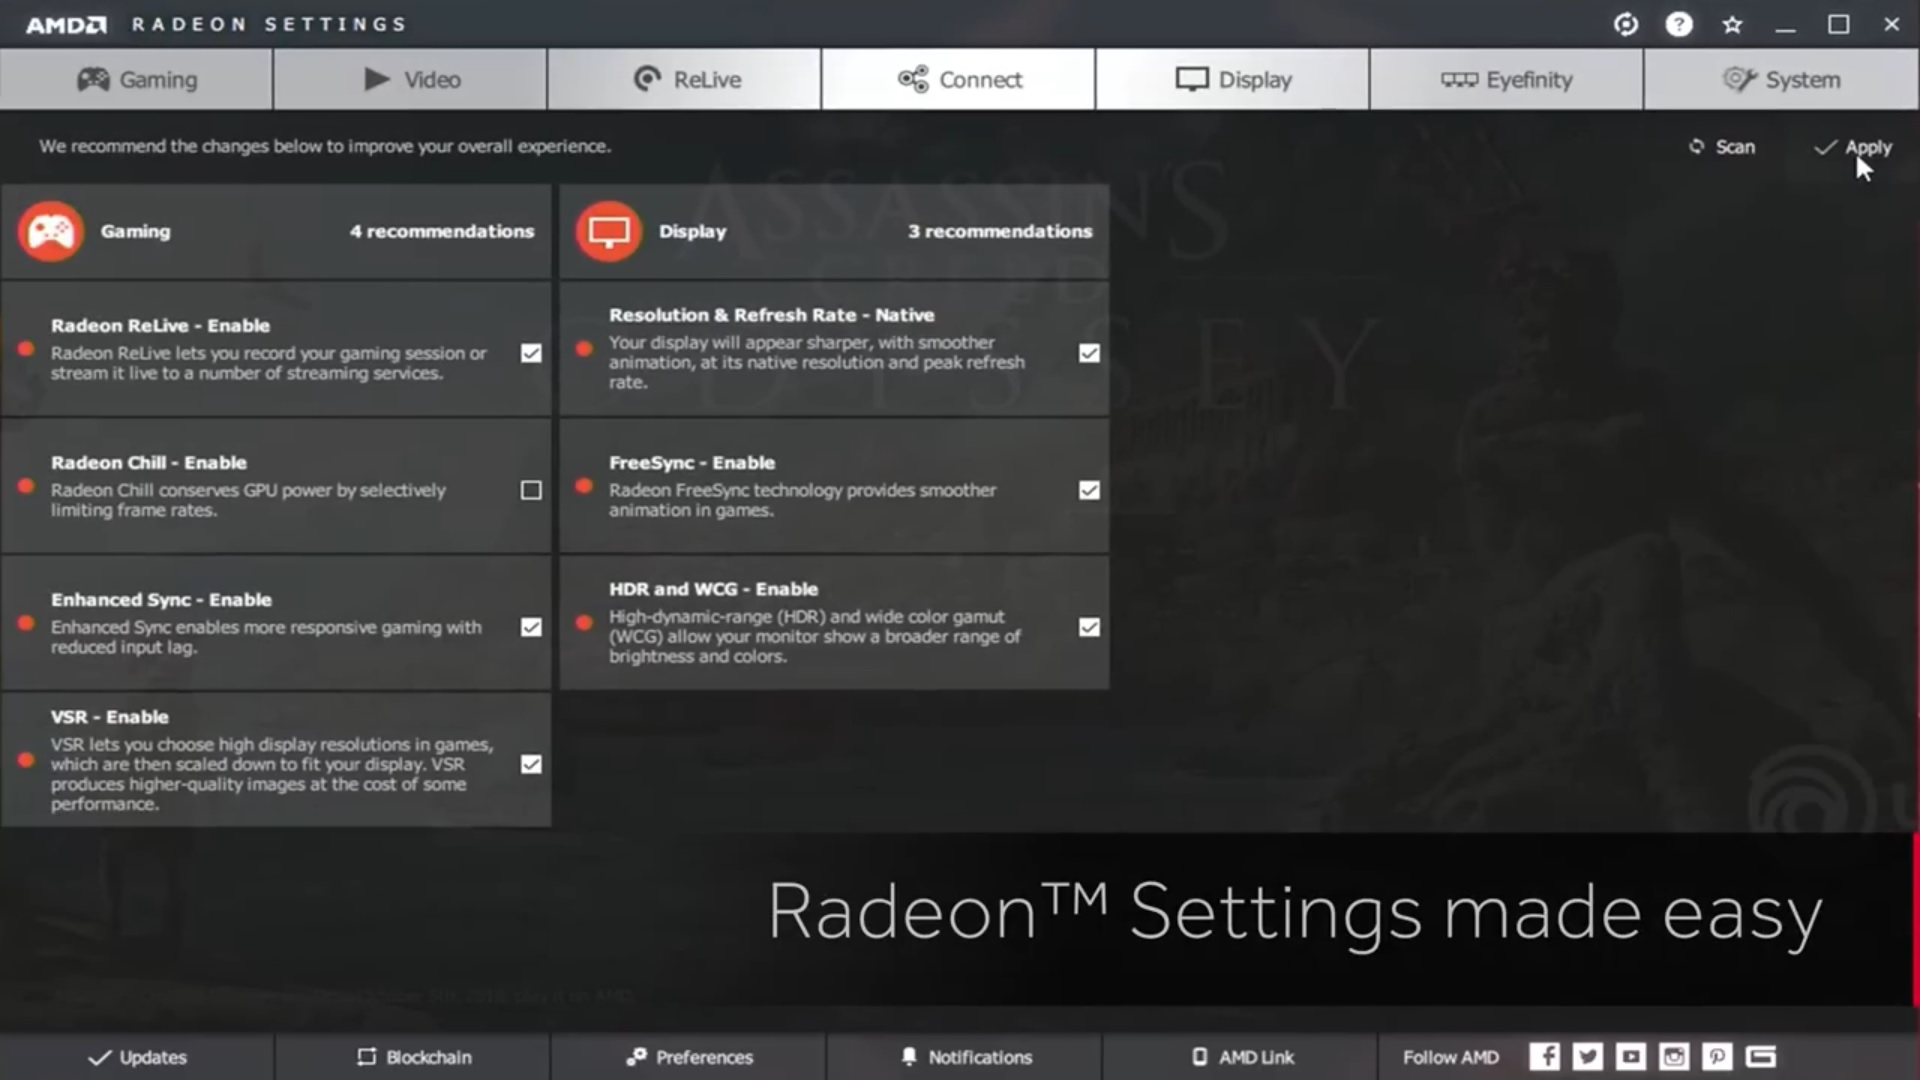 Radeon Software Advisor 2